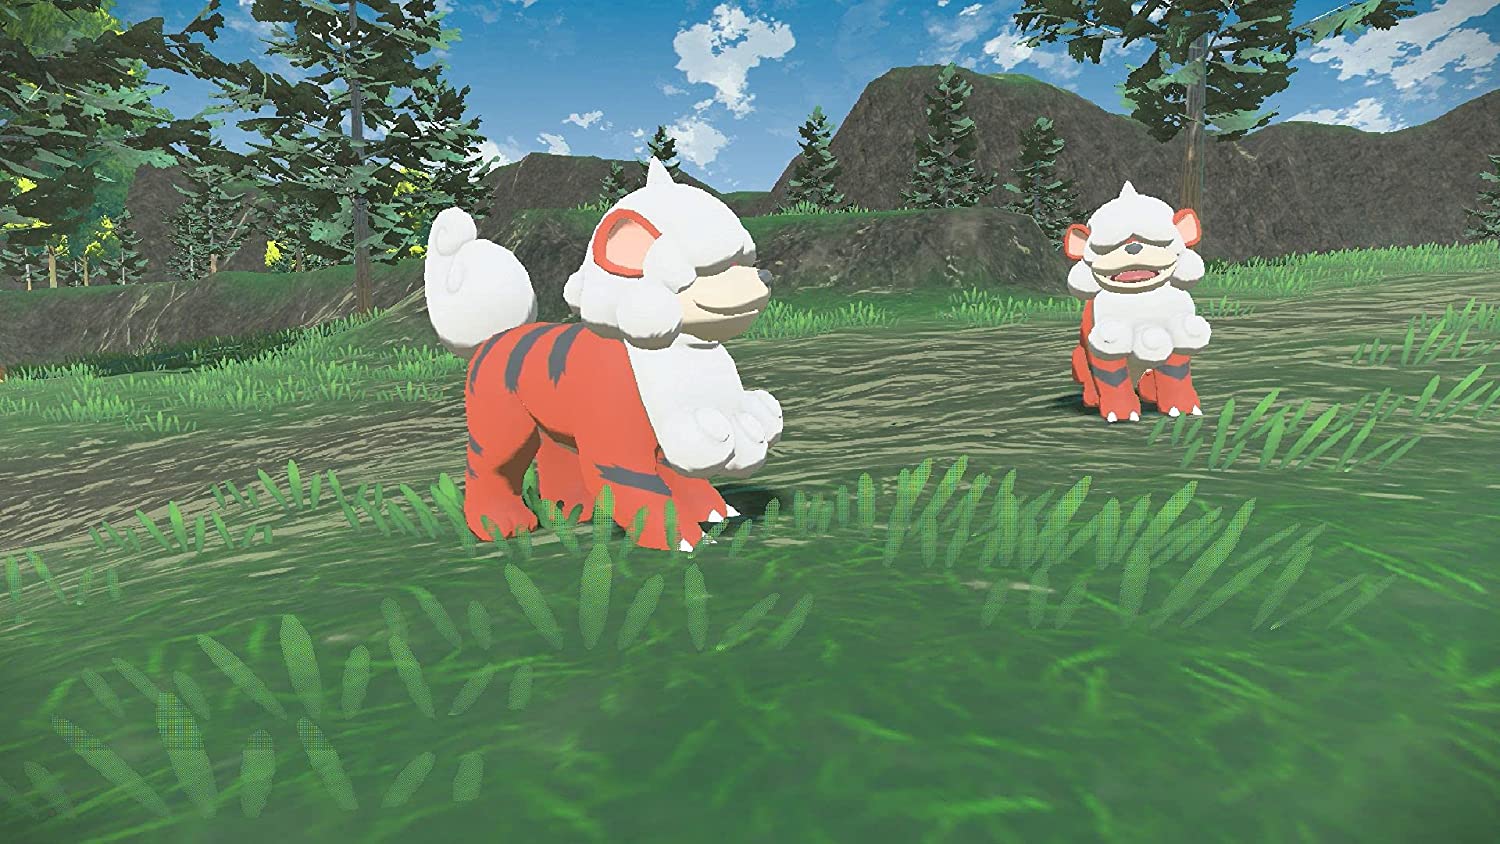 Pokémon Legends: Arceus and Animal Crossing New Horizons - Nintendo Switch Bundle - Pro-Distributing